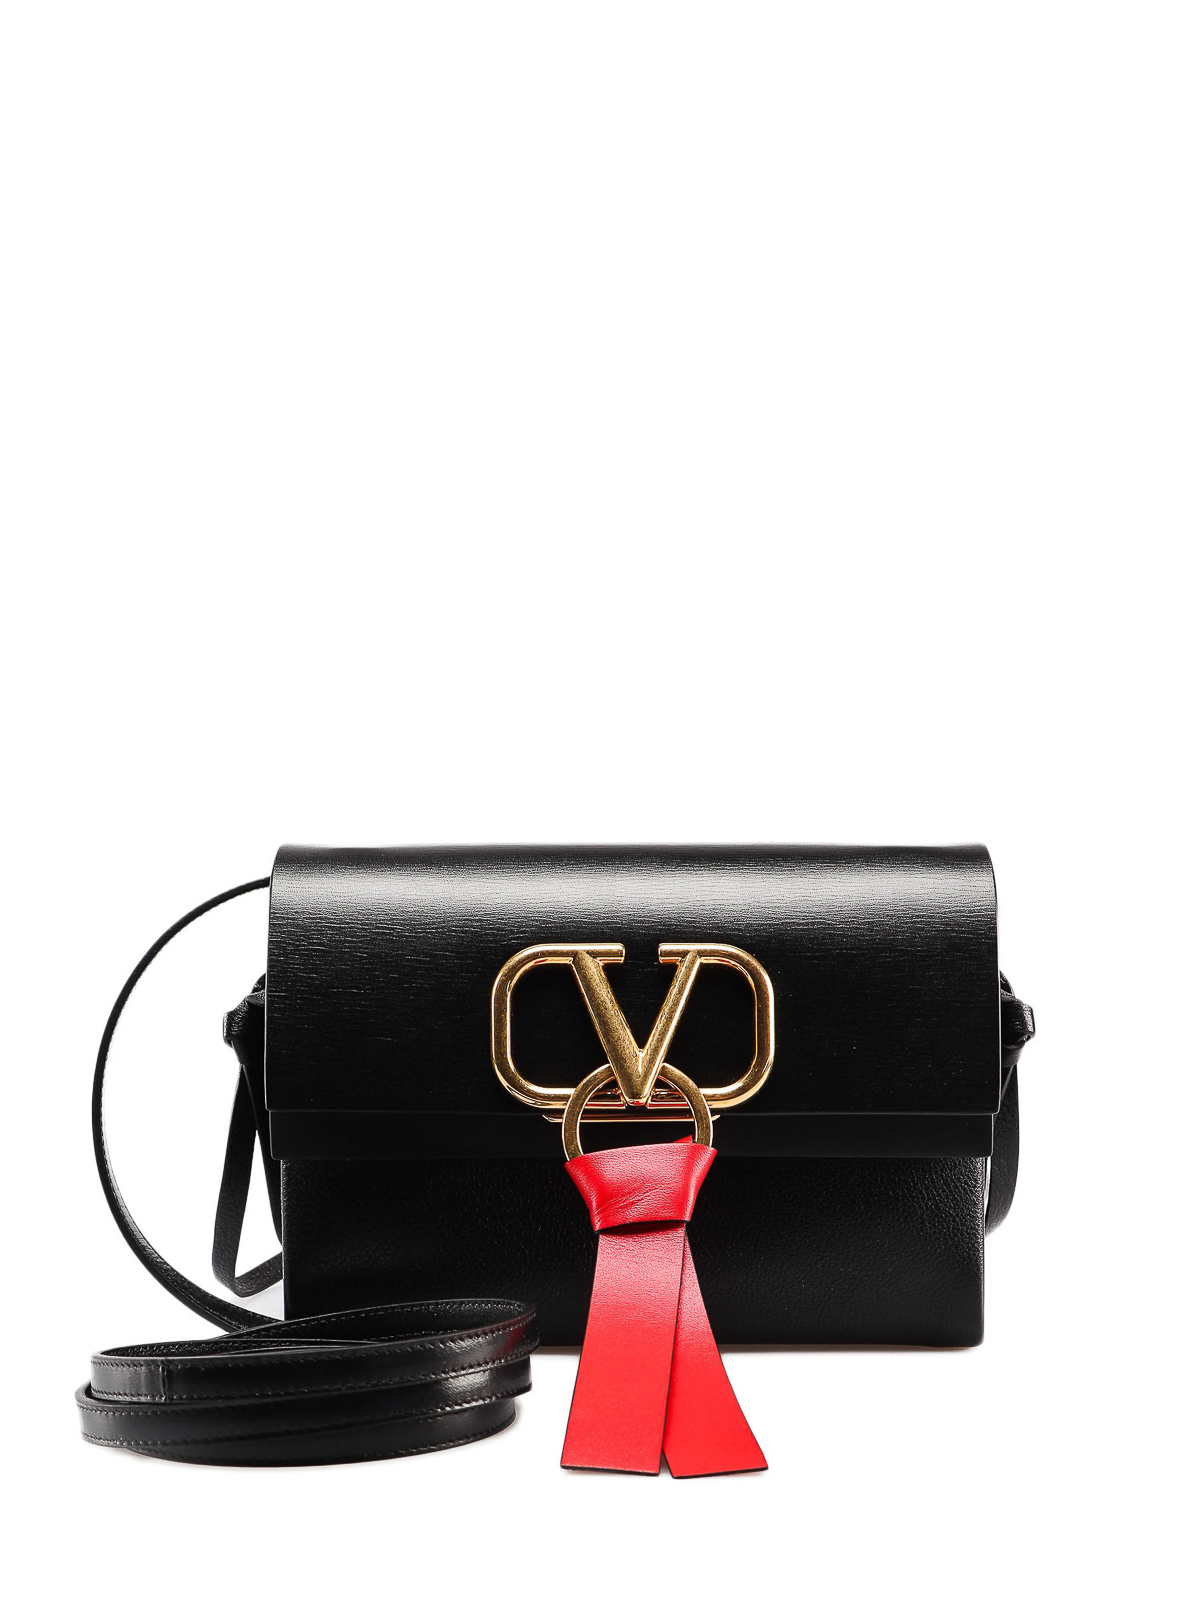 Handbags Valentino Valentino VRing Bag Black Leather